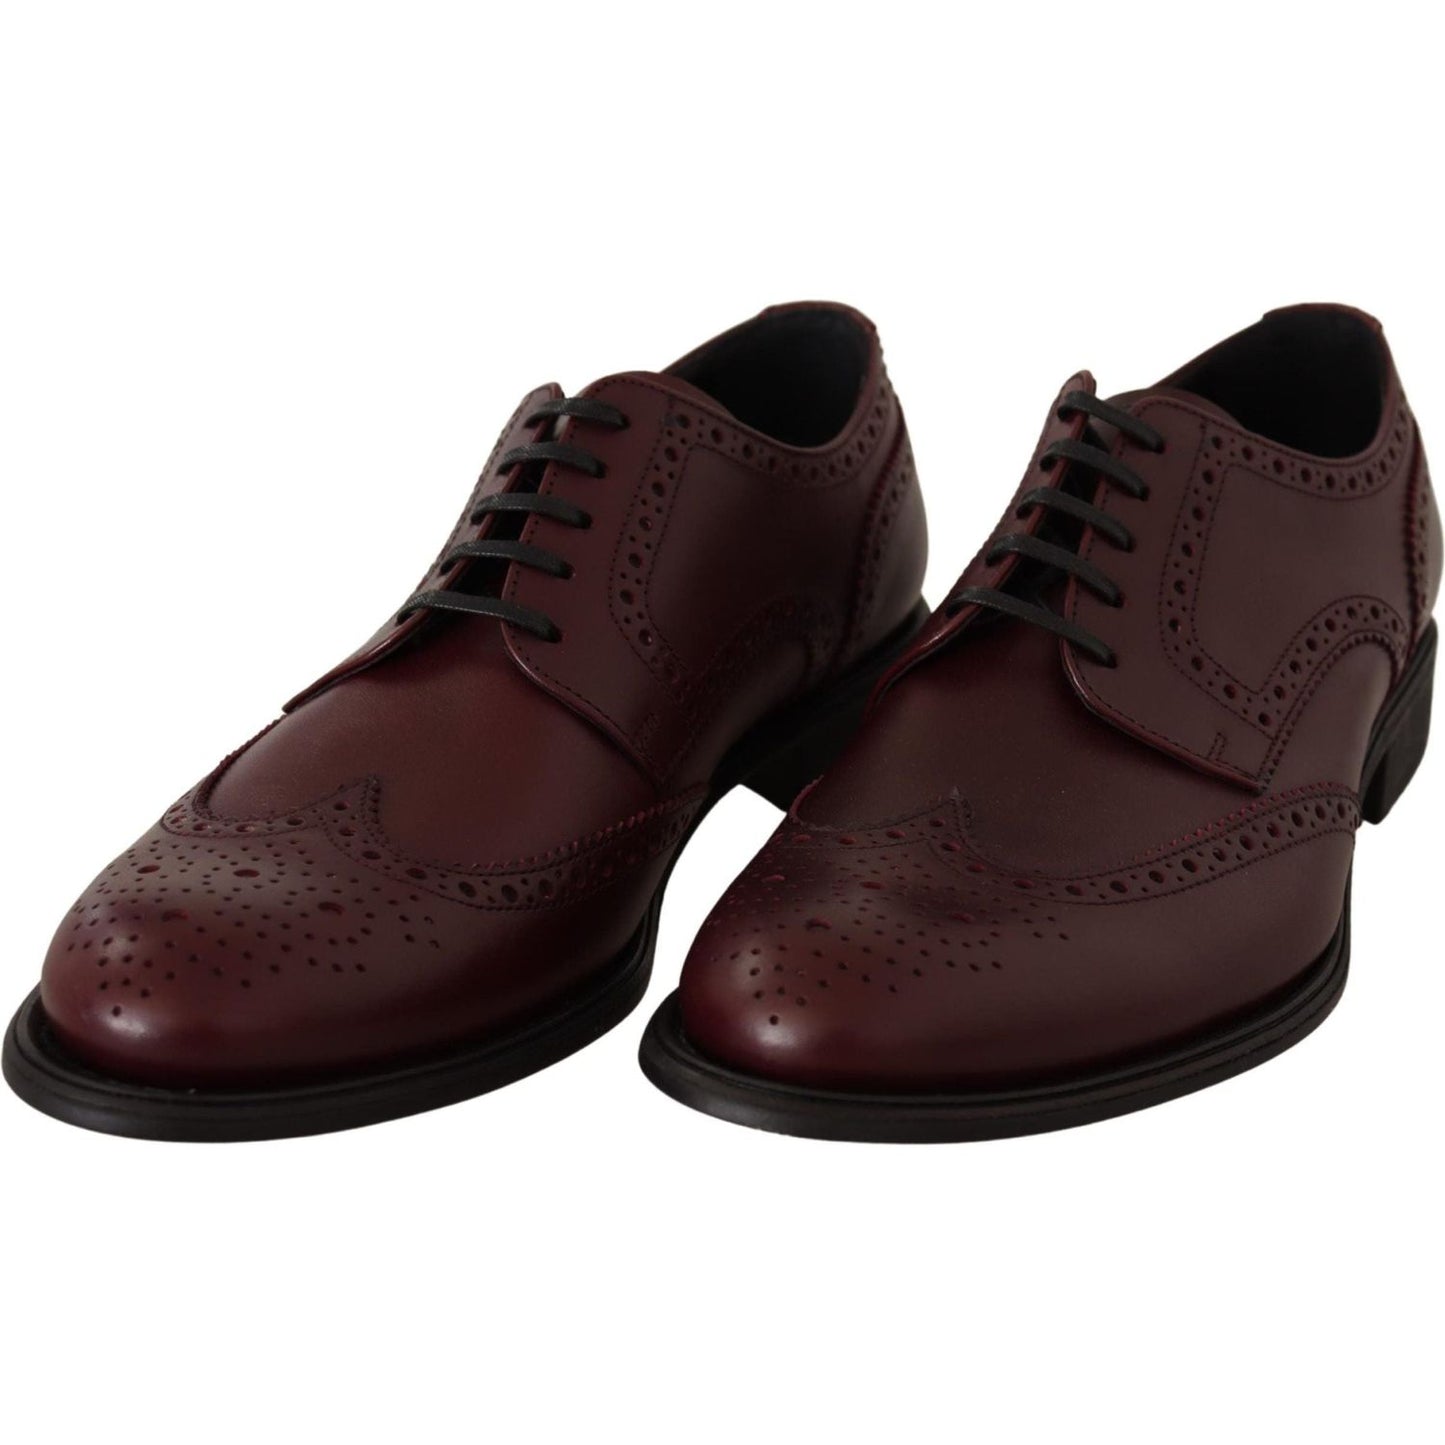 Dolce & Gabbana Elegant Bordeaux Leather Derby Shoes bordeaux-leather-oxford-wingtip-formal-shoes IMG_4866-scaled-af4761d8-ad2.jpg